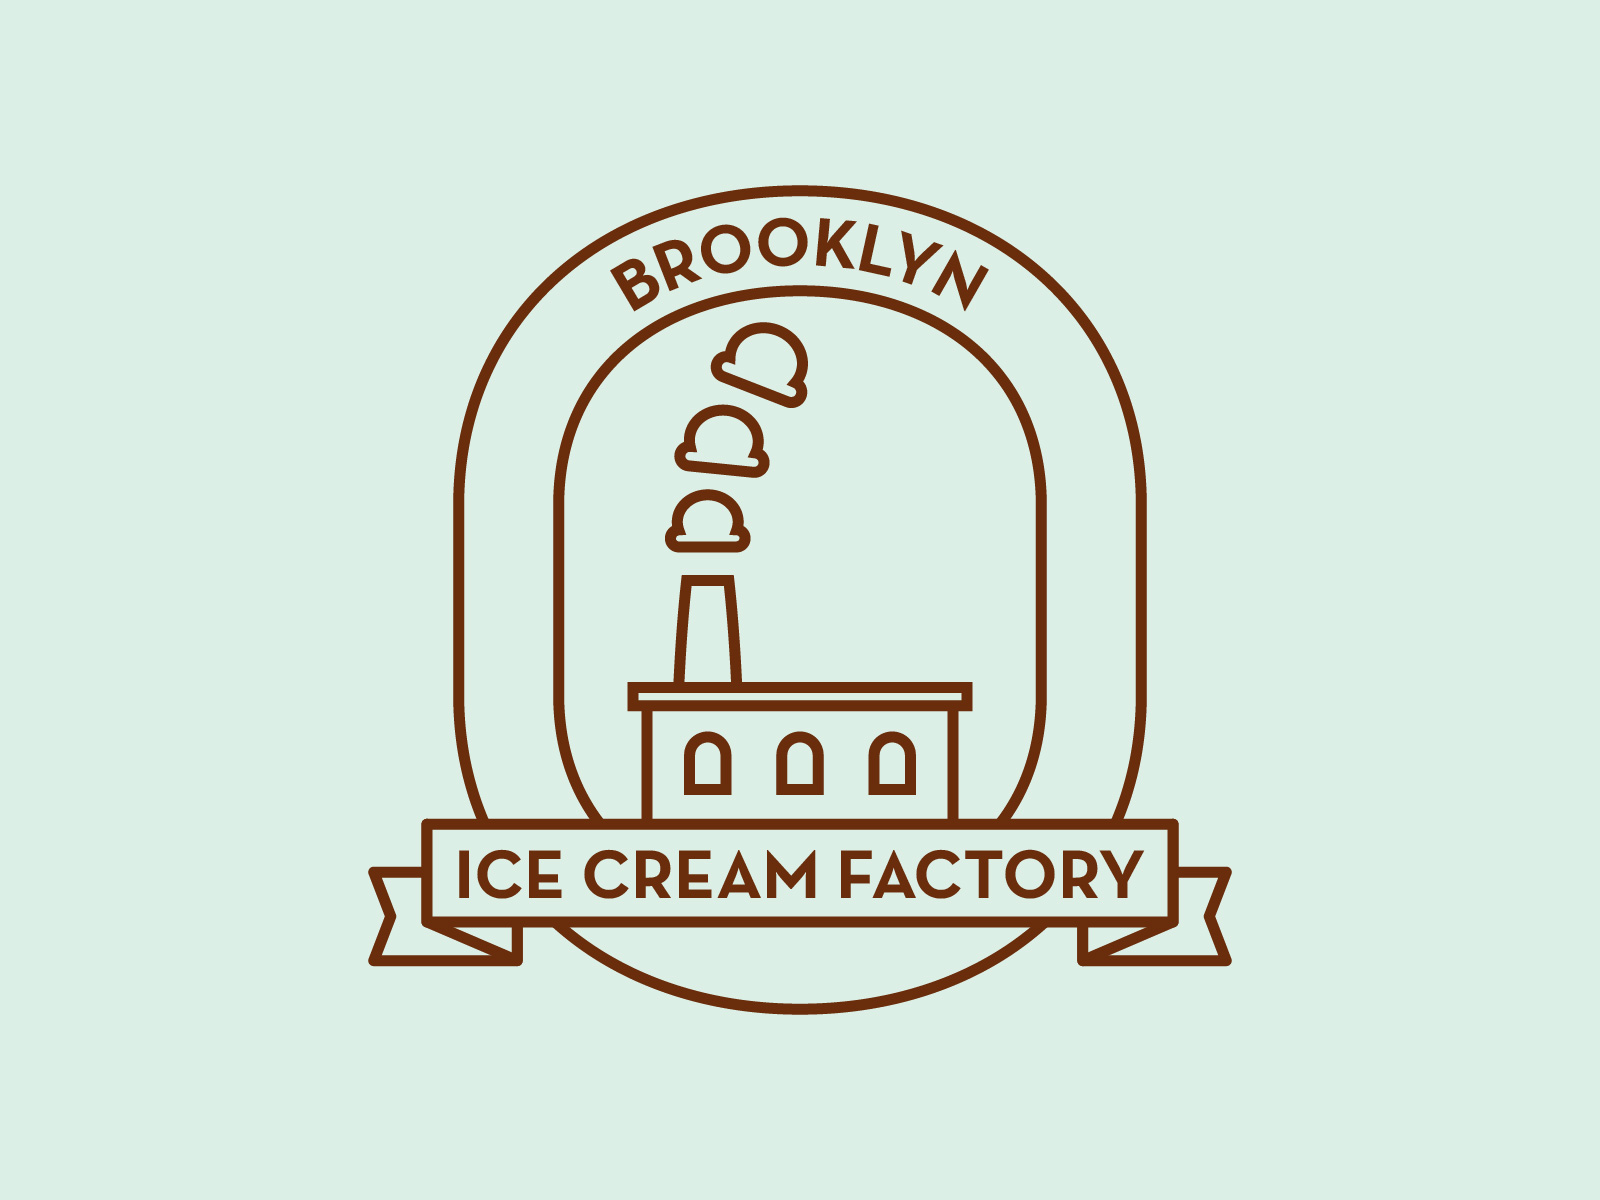 Brooklyn Ice Cream Factory logo